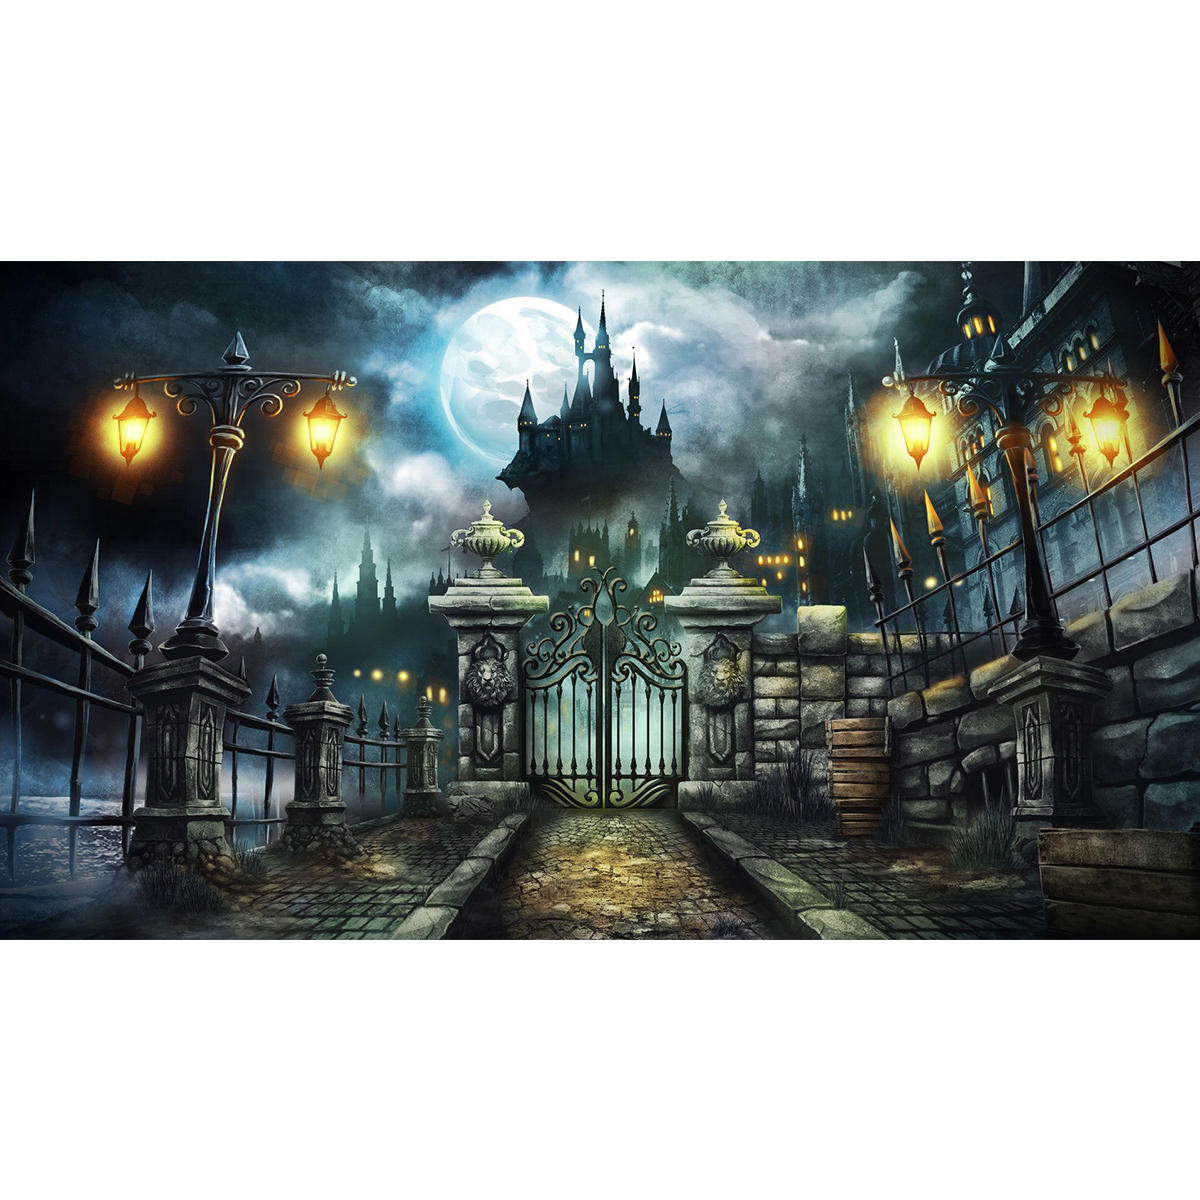 7x5FT Halloween Horror Castle Theme Photography Backdrop Studio Prop Background